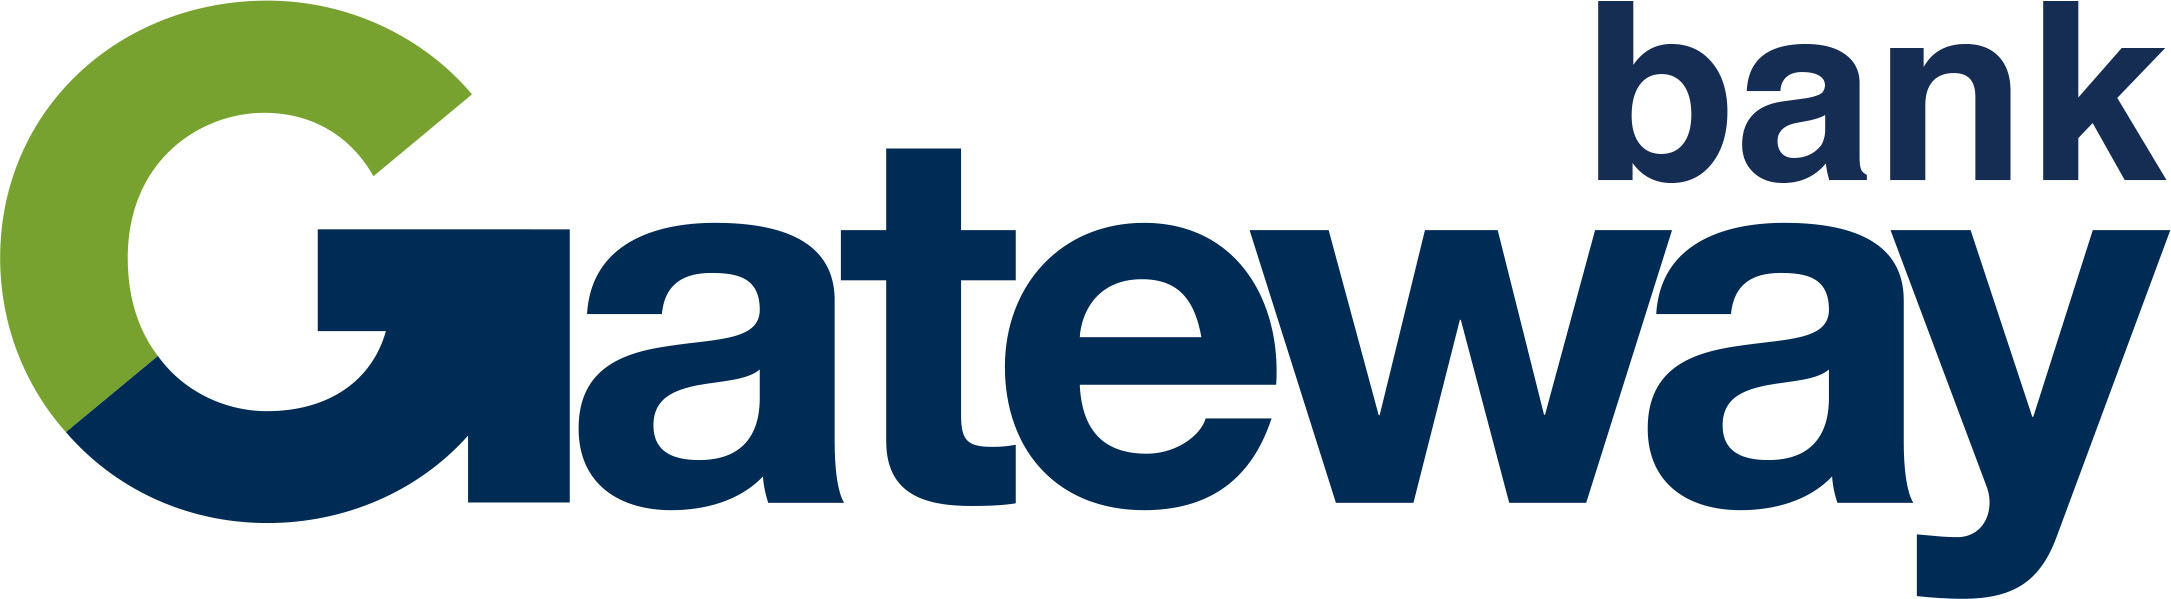 GatewayBank Landscape logo